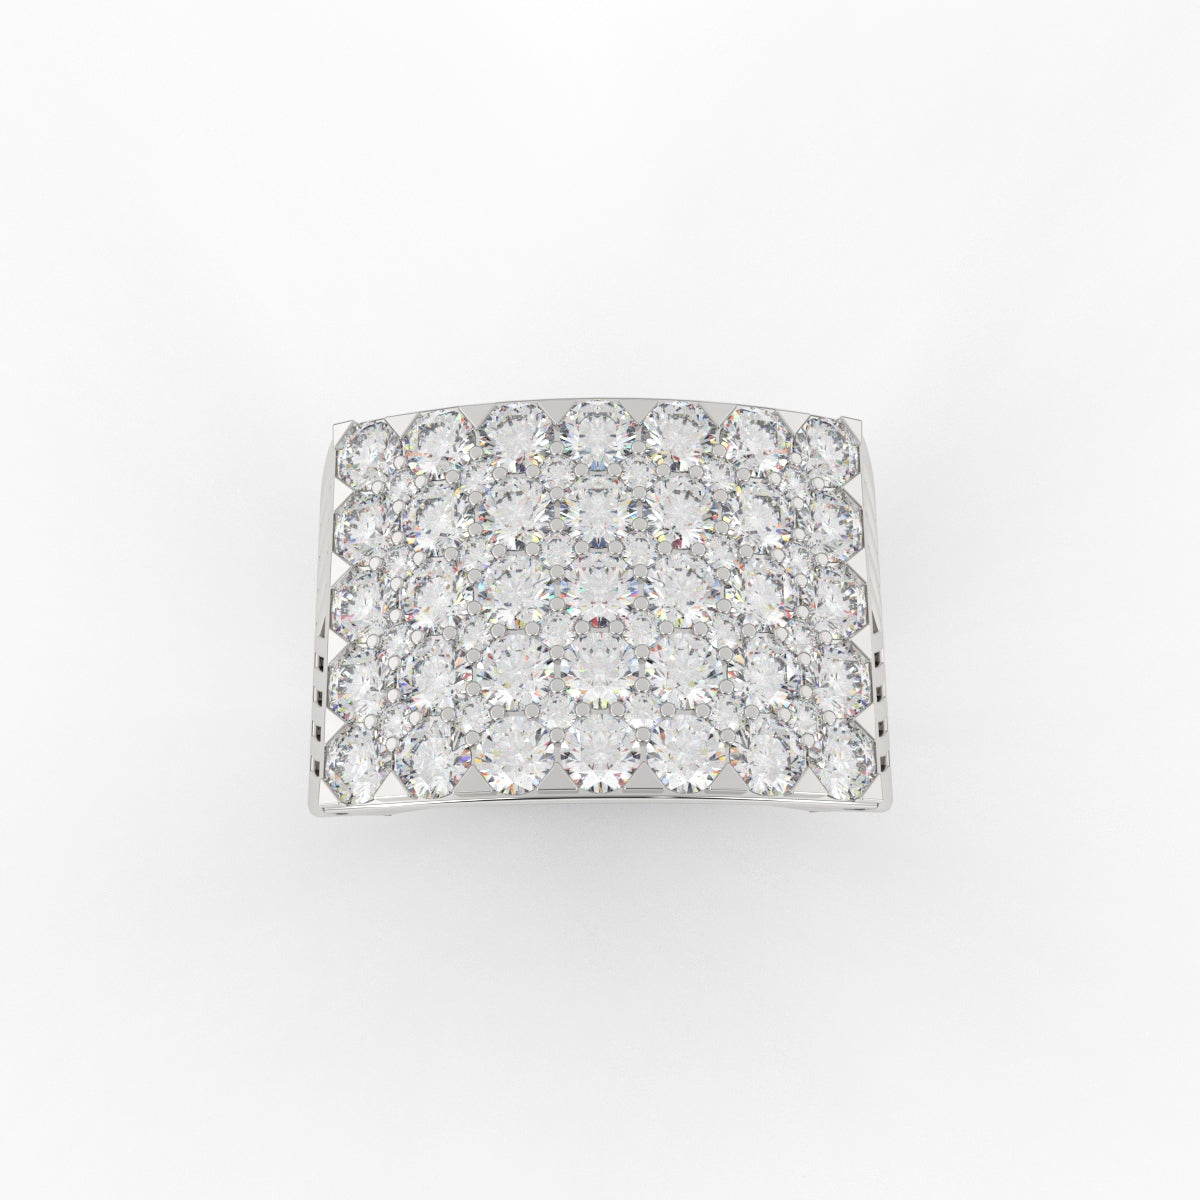 Impressive Diamond Cluster Ring